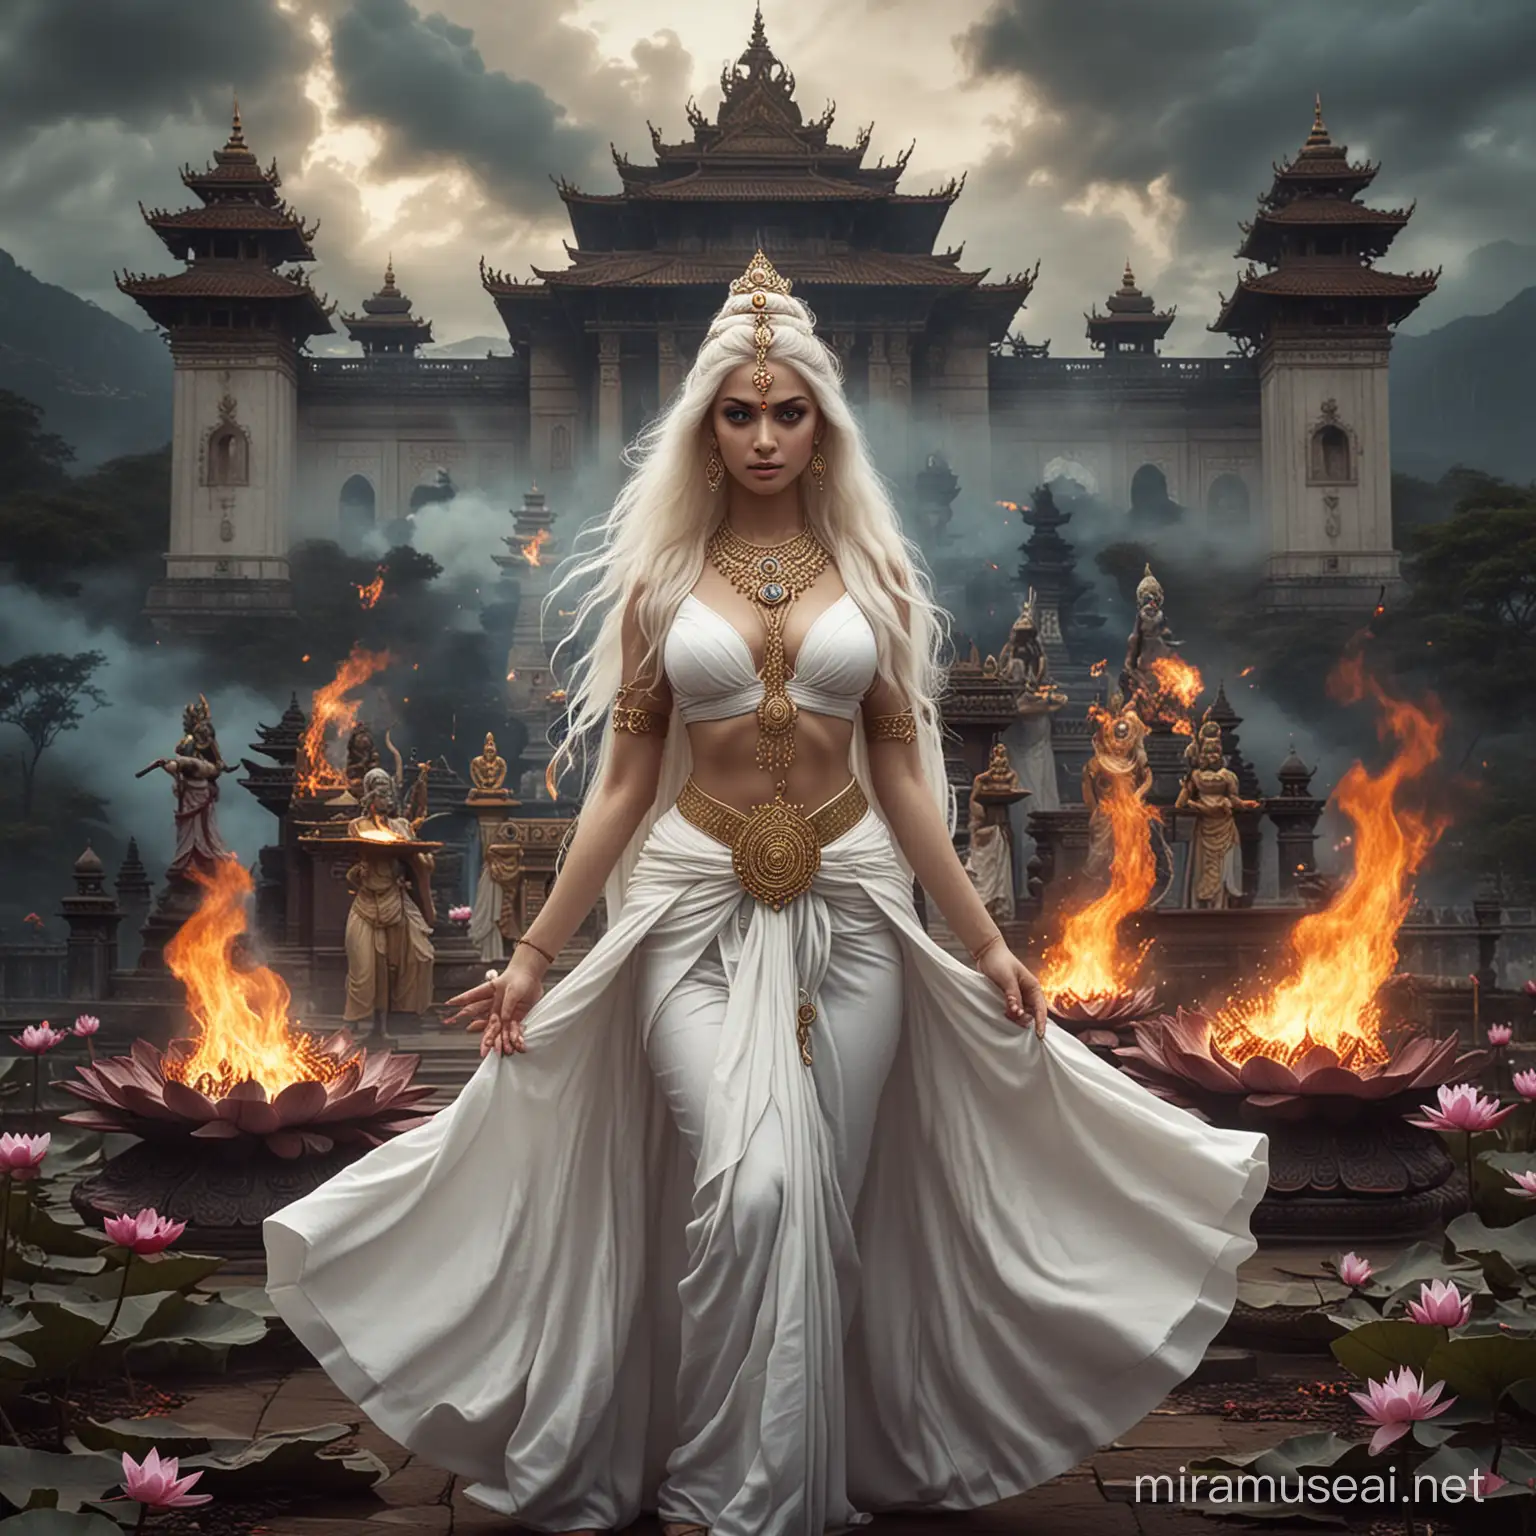 Empress Kayashiel Engulfed in Fiery Combat Amidst Demonic Hindu Goddesses